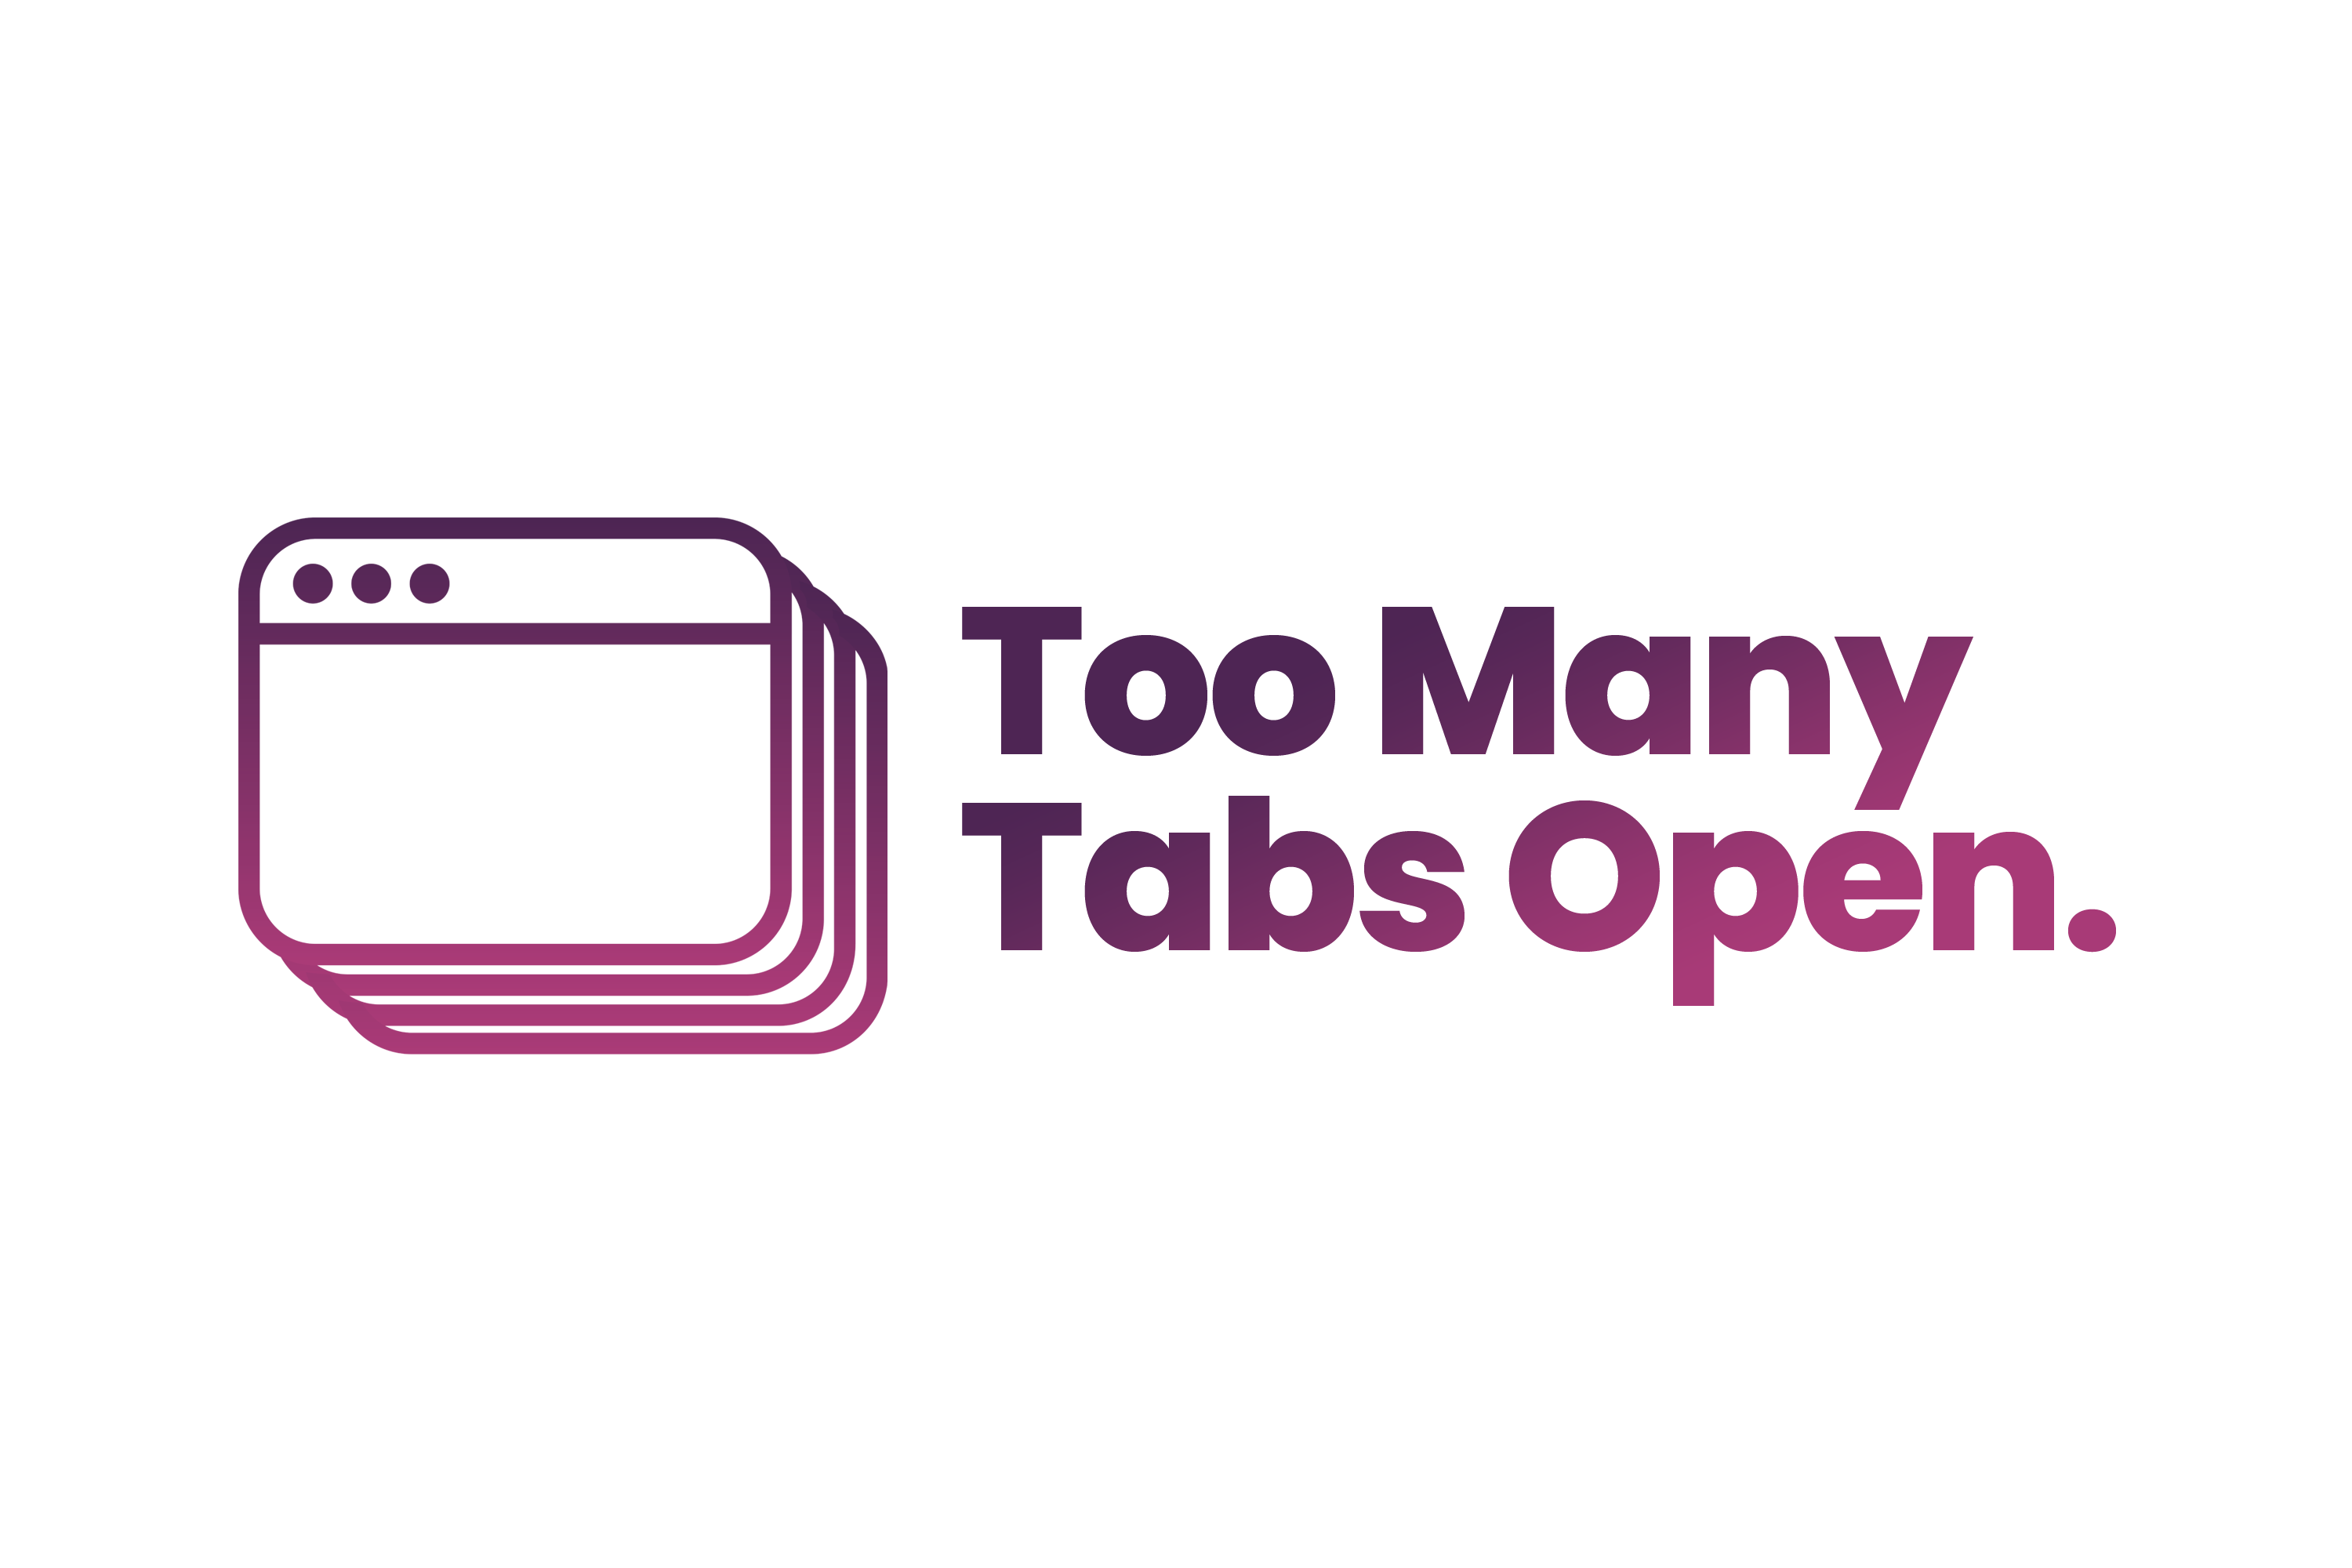 Too Many Tabs Open